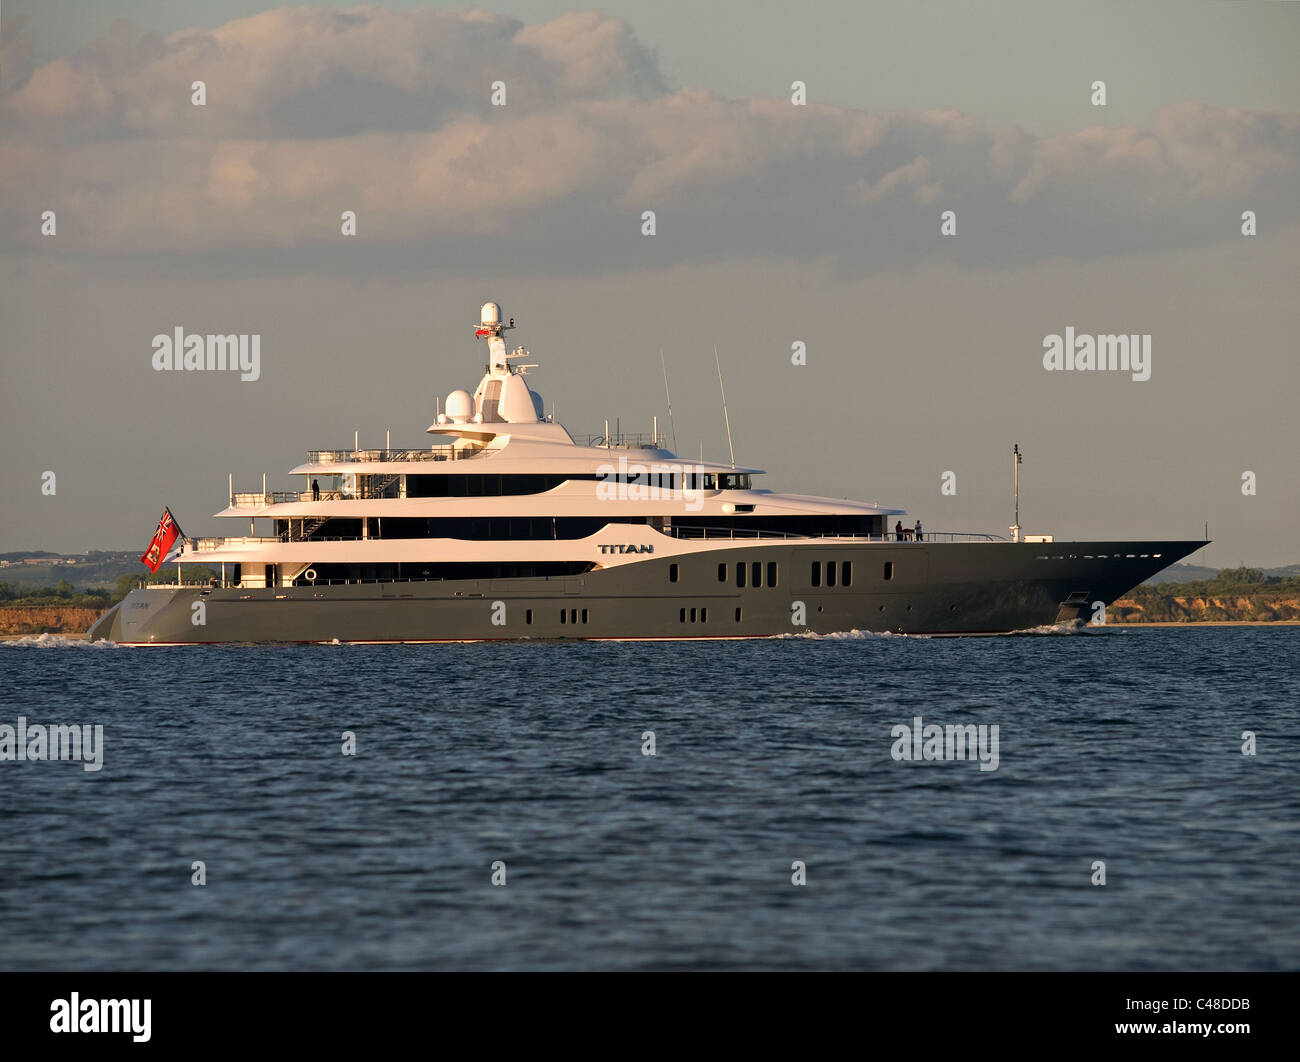 Super Motor Yacht Immagini e Fotos Stock - Alamy